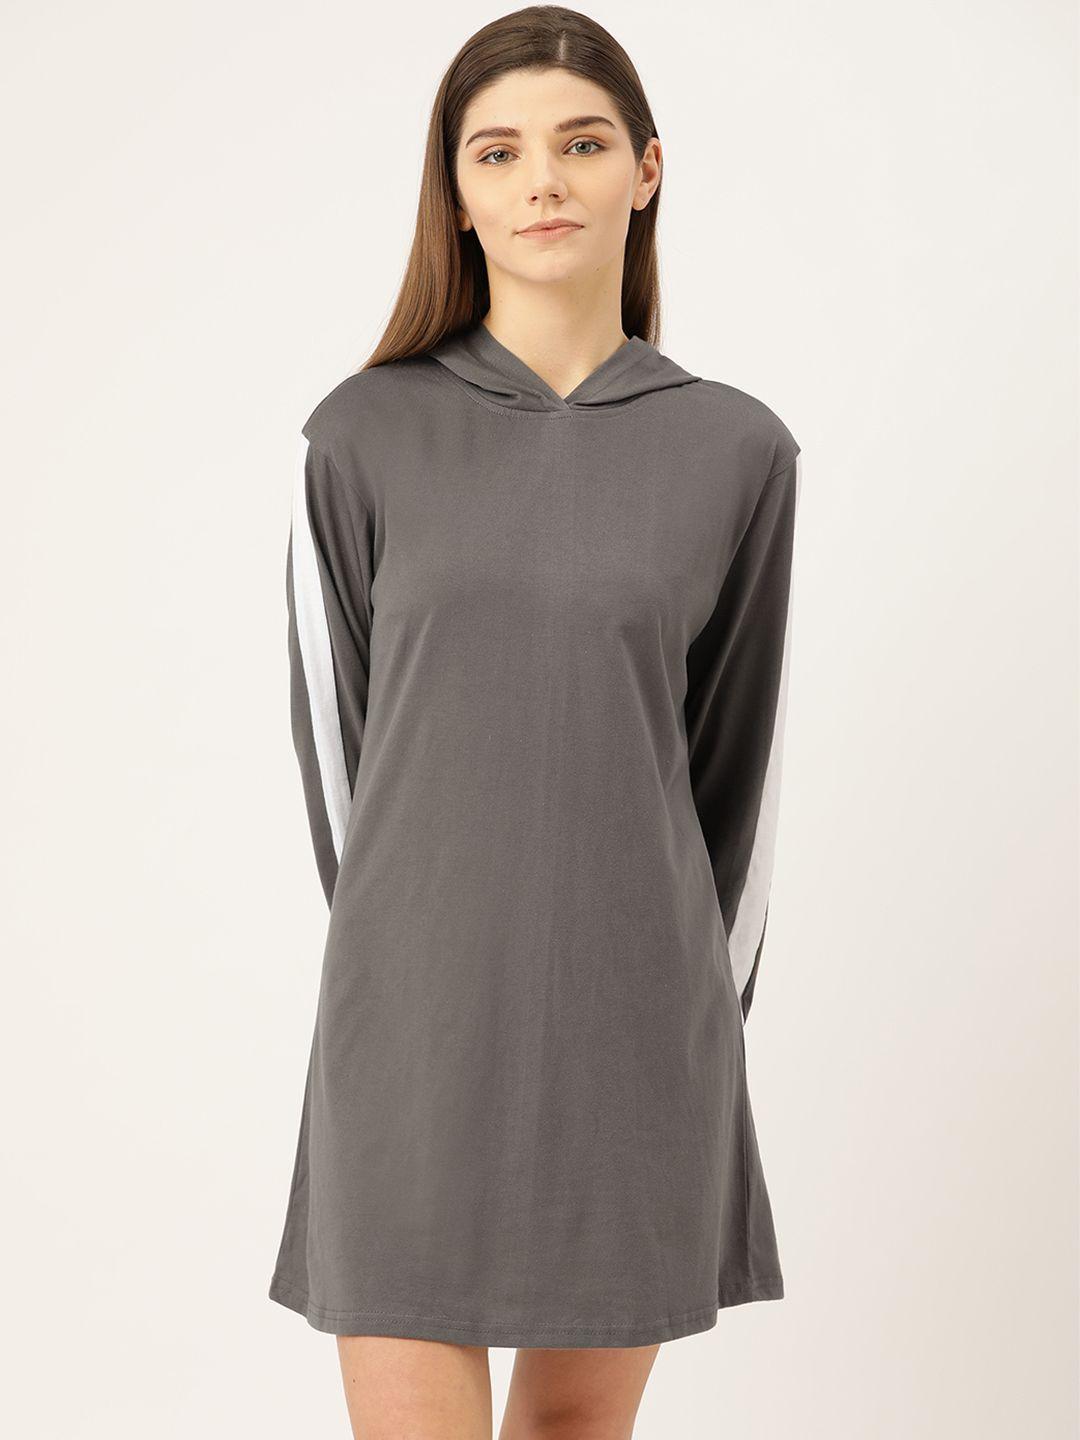 klamotten-charcoal-grey-pure-cotton-solid-hooded-sleep-shirts